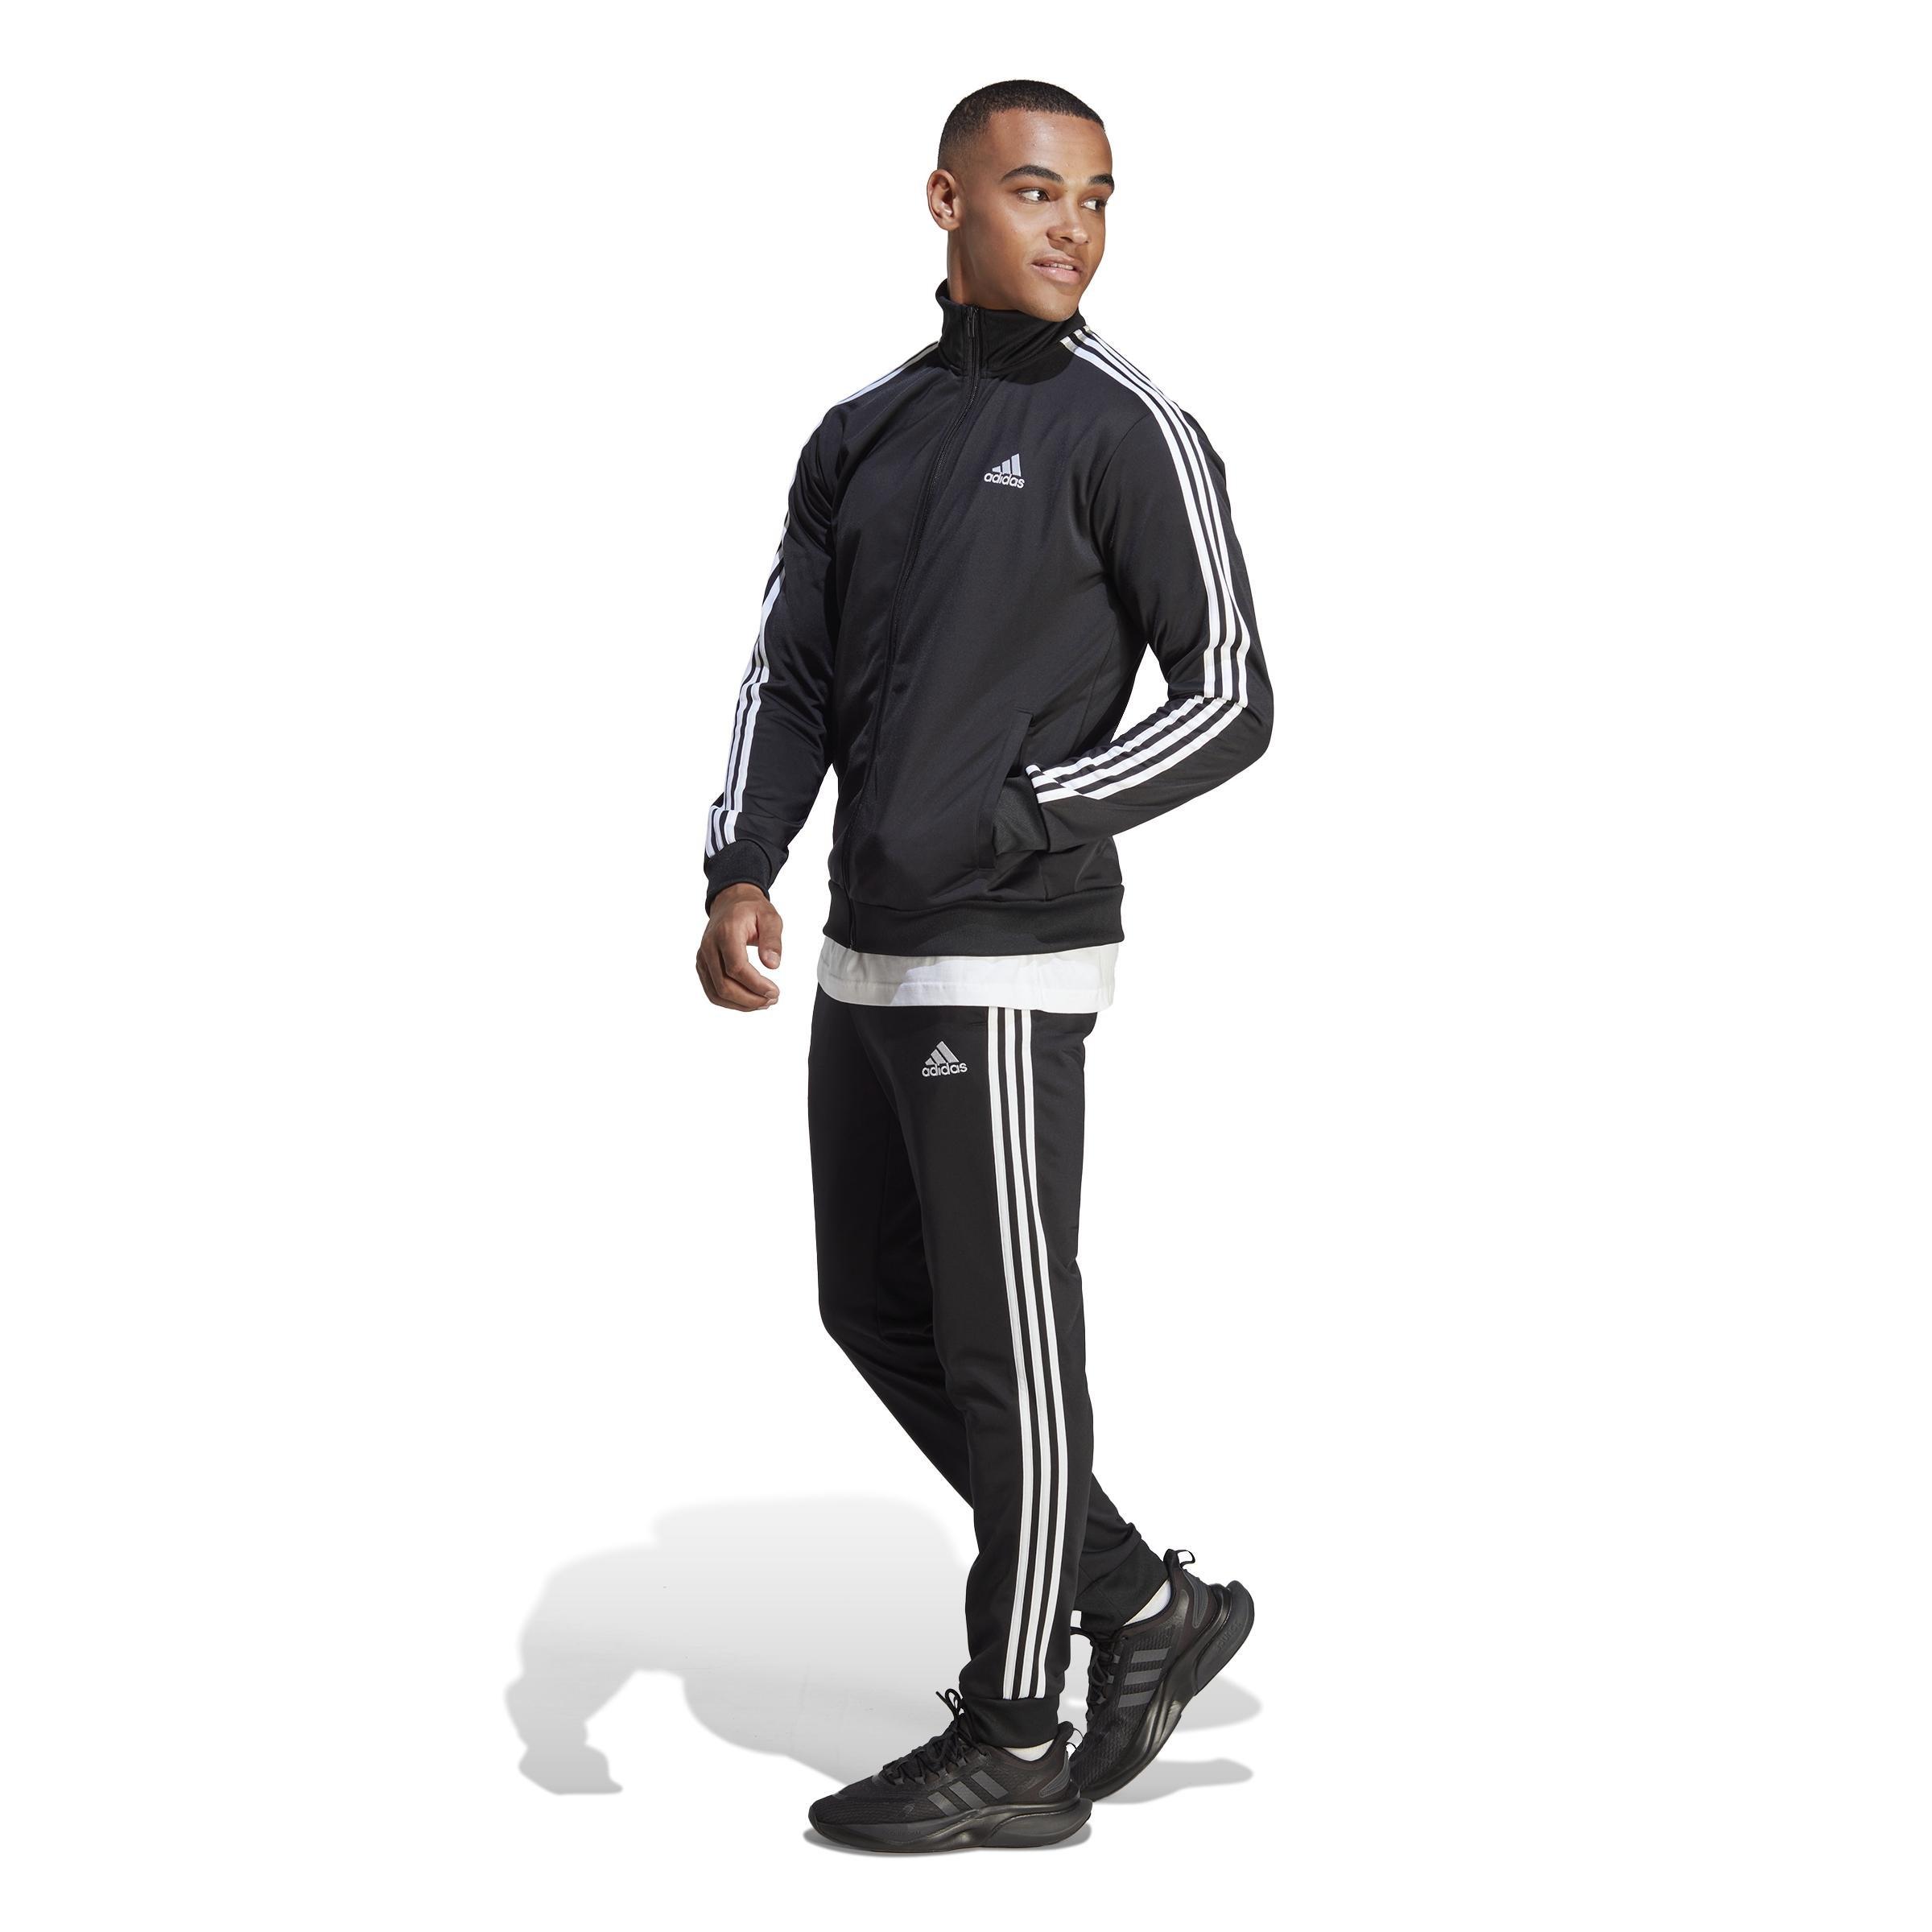 adidas - Men Basic 3-Stripes Tricot Tracksuit, Black